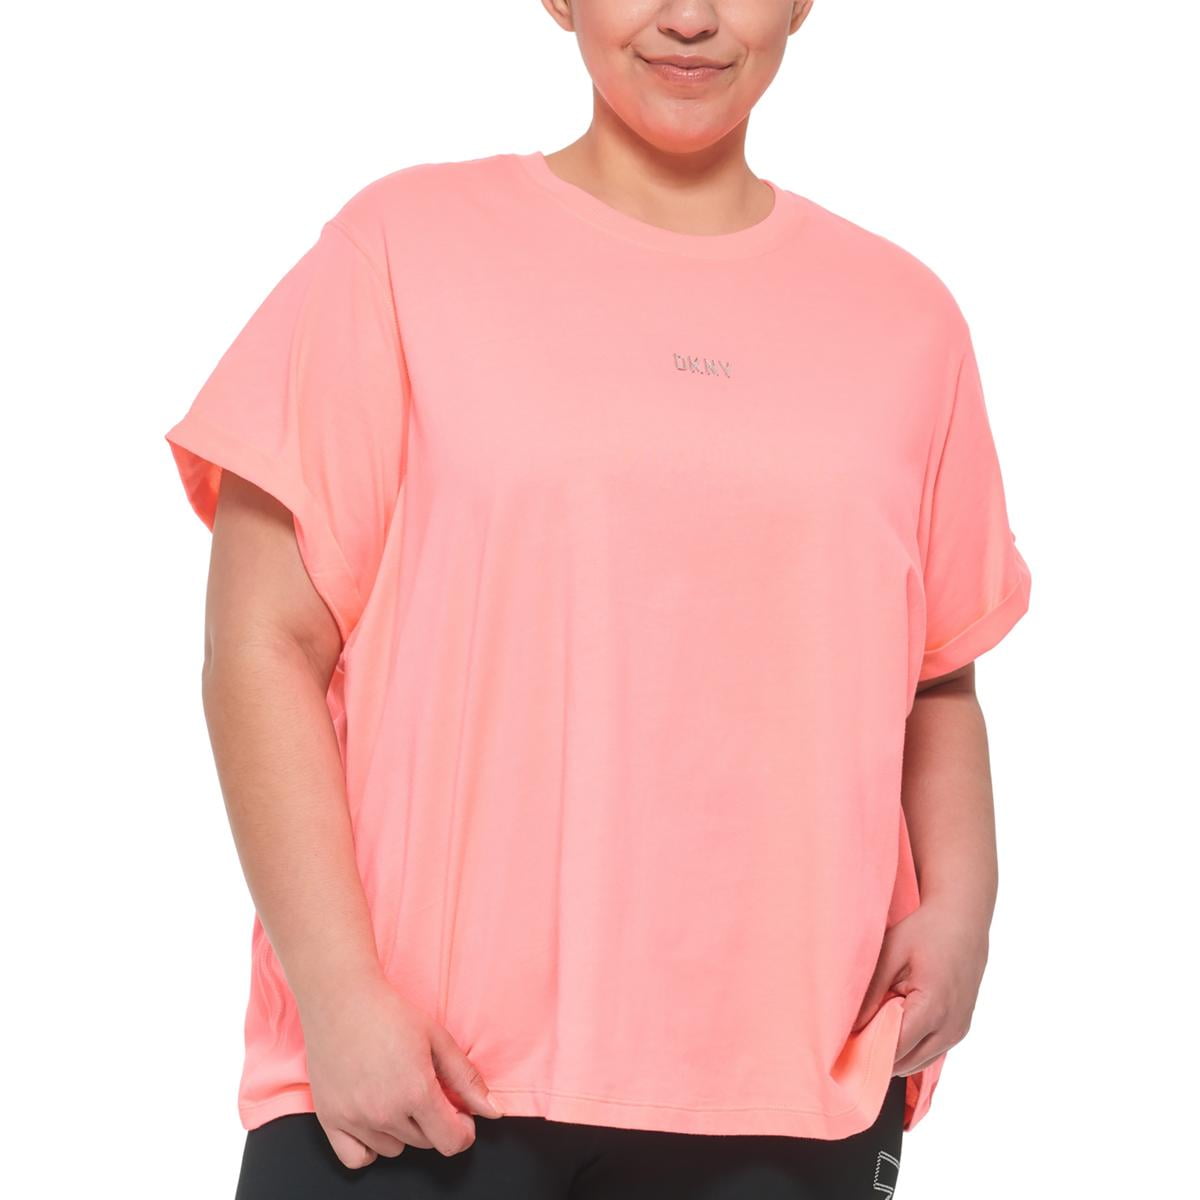 Shirts Dkny - Lace cotton shirt - P4522075C100